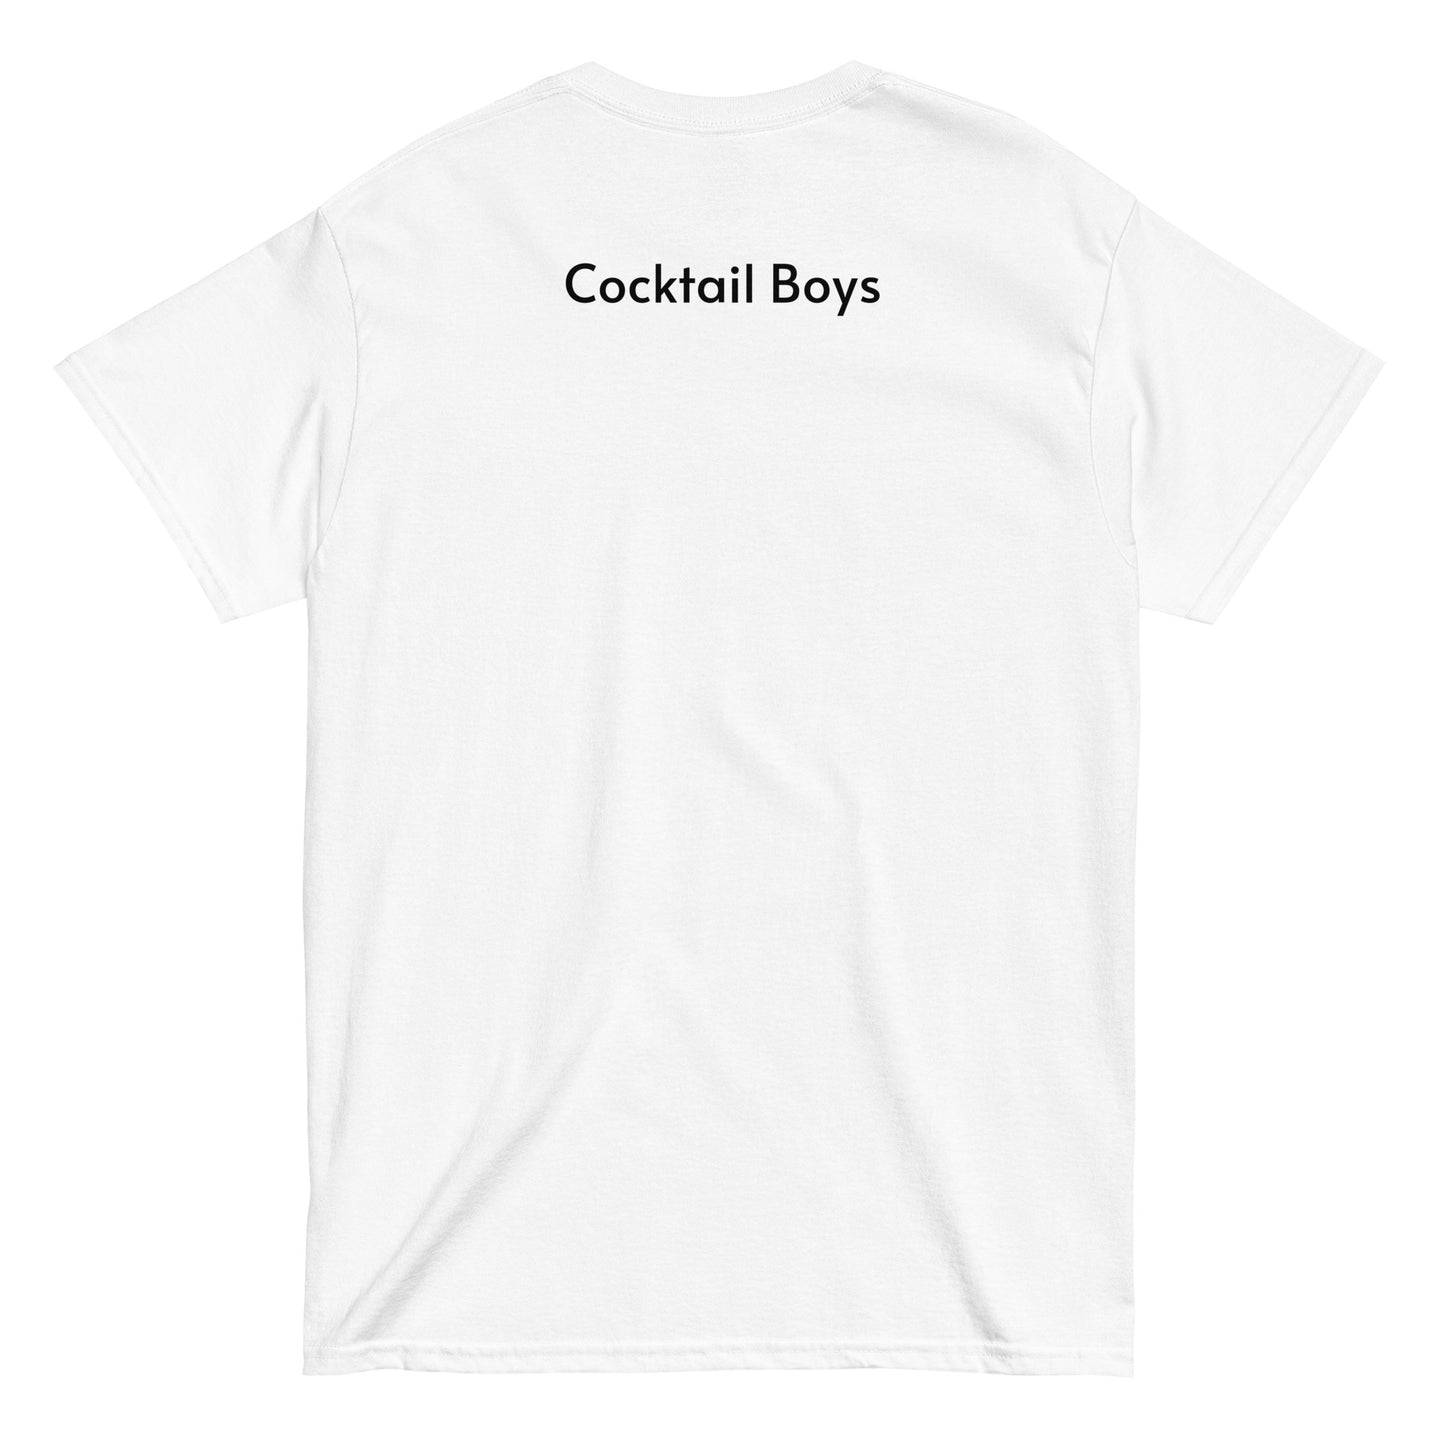 Cocktail Boys Blue logo Men's classic tee